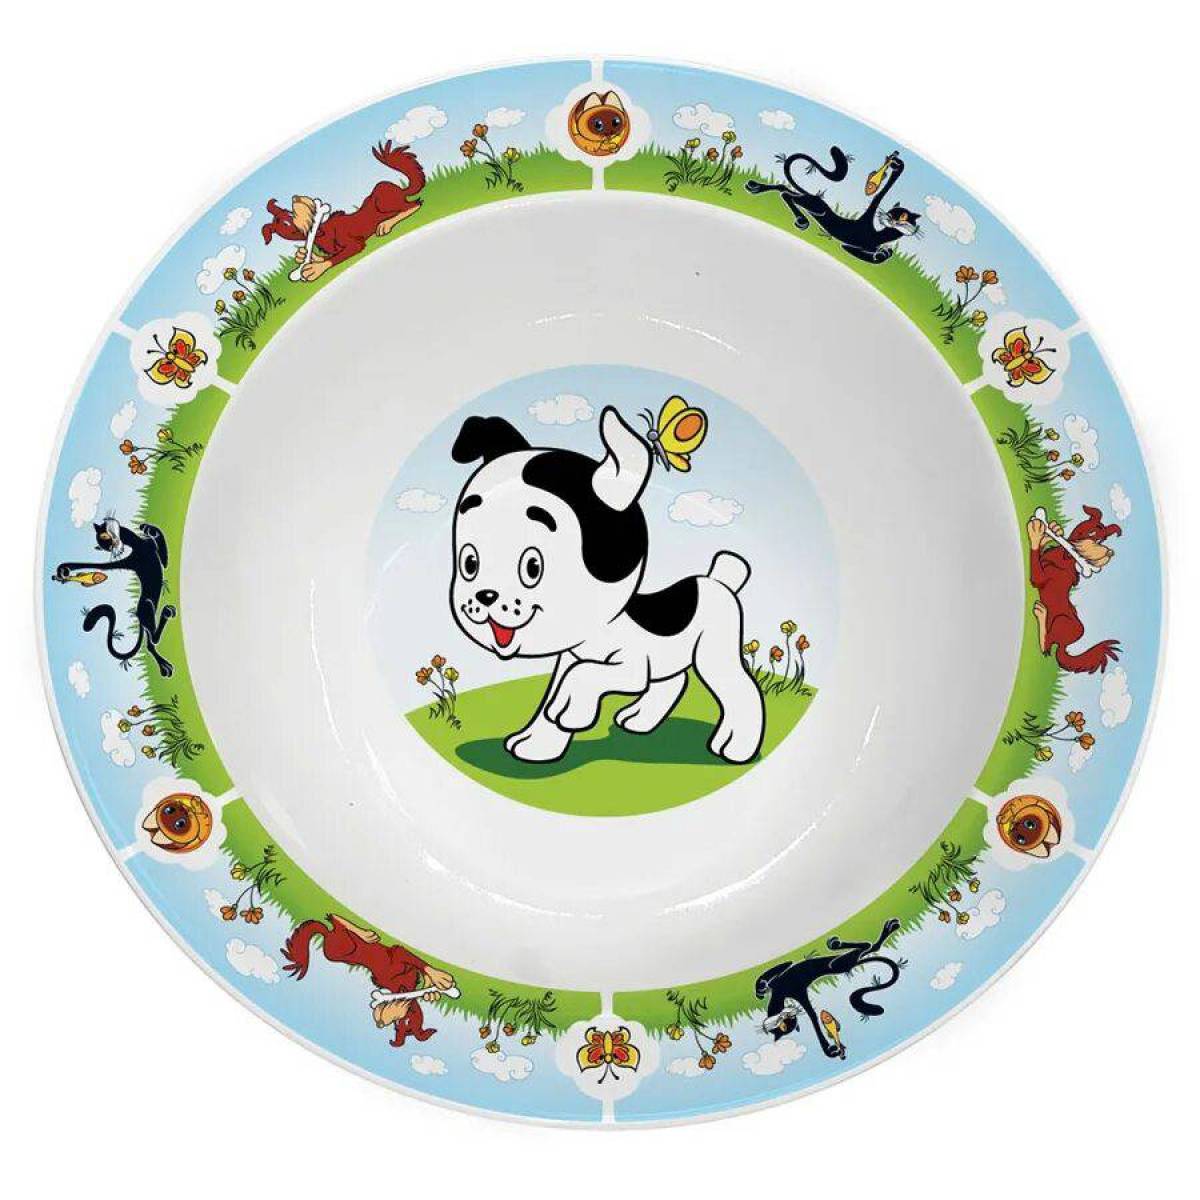 Картинка для детей тарелка #36